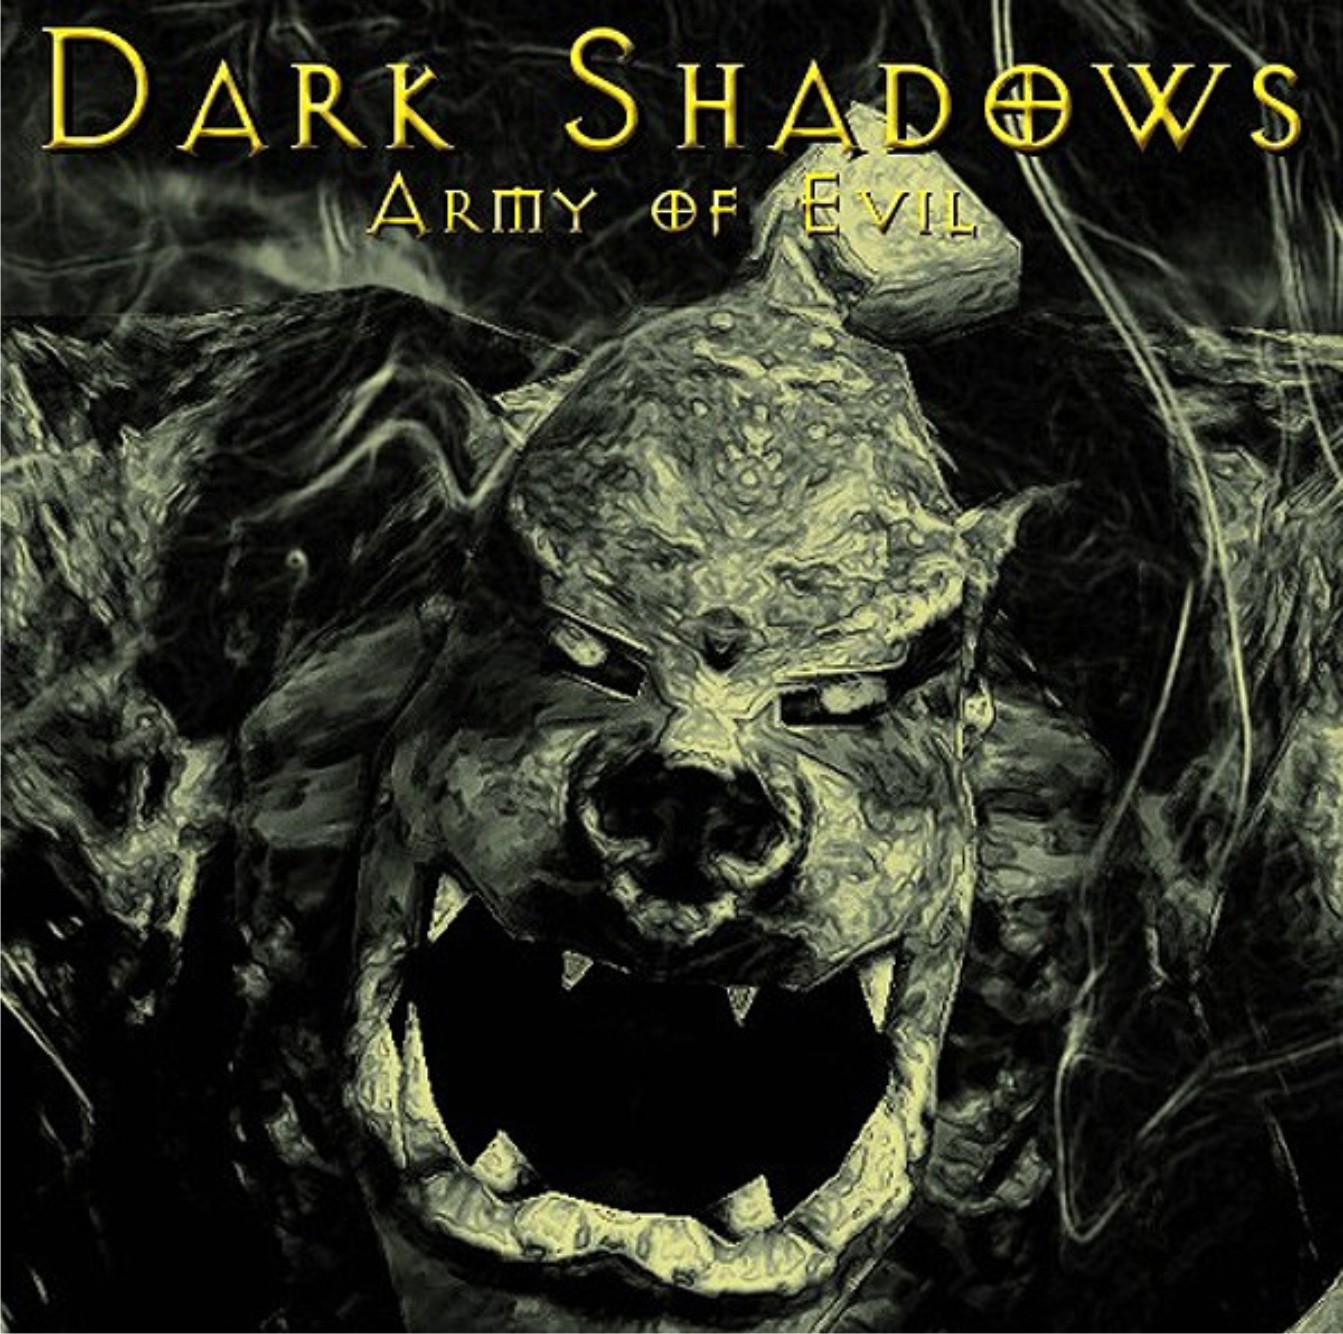 Dark shadows game